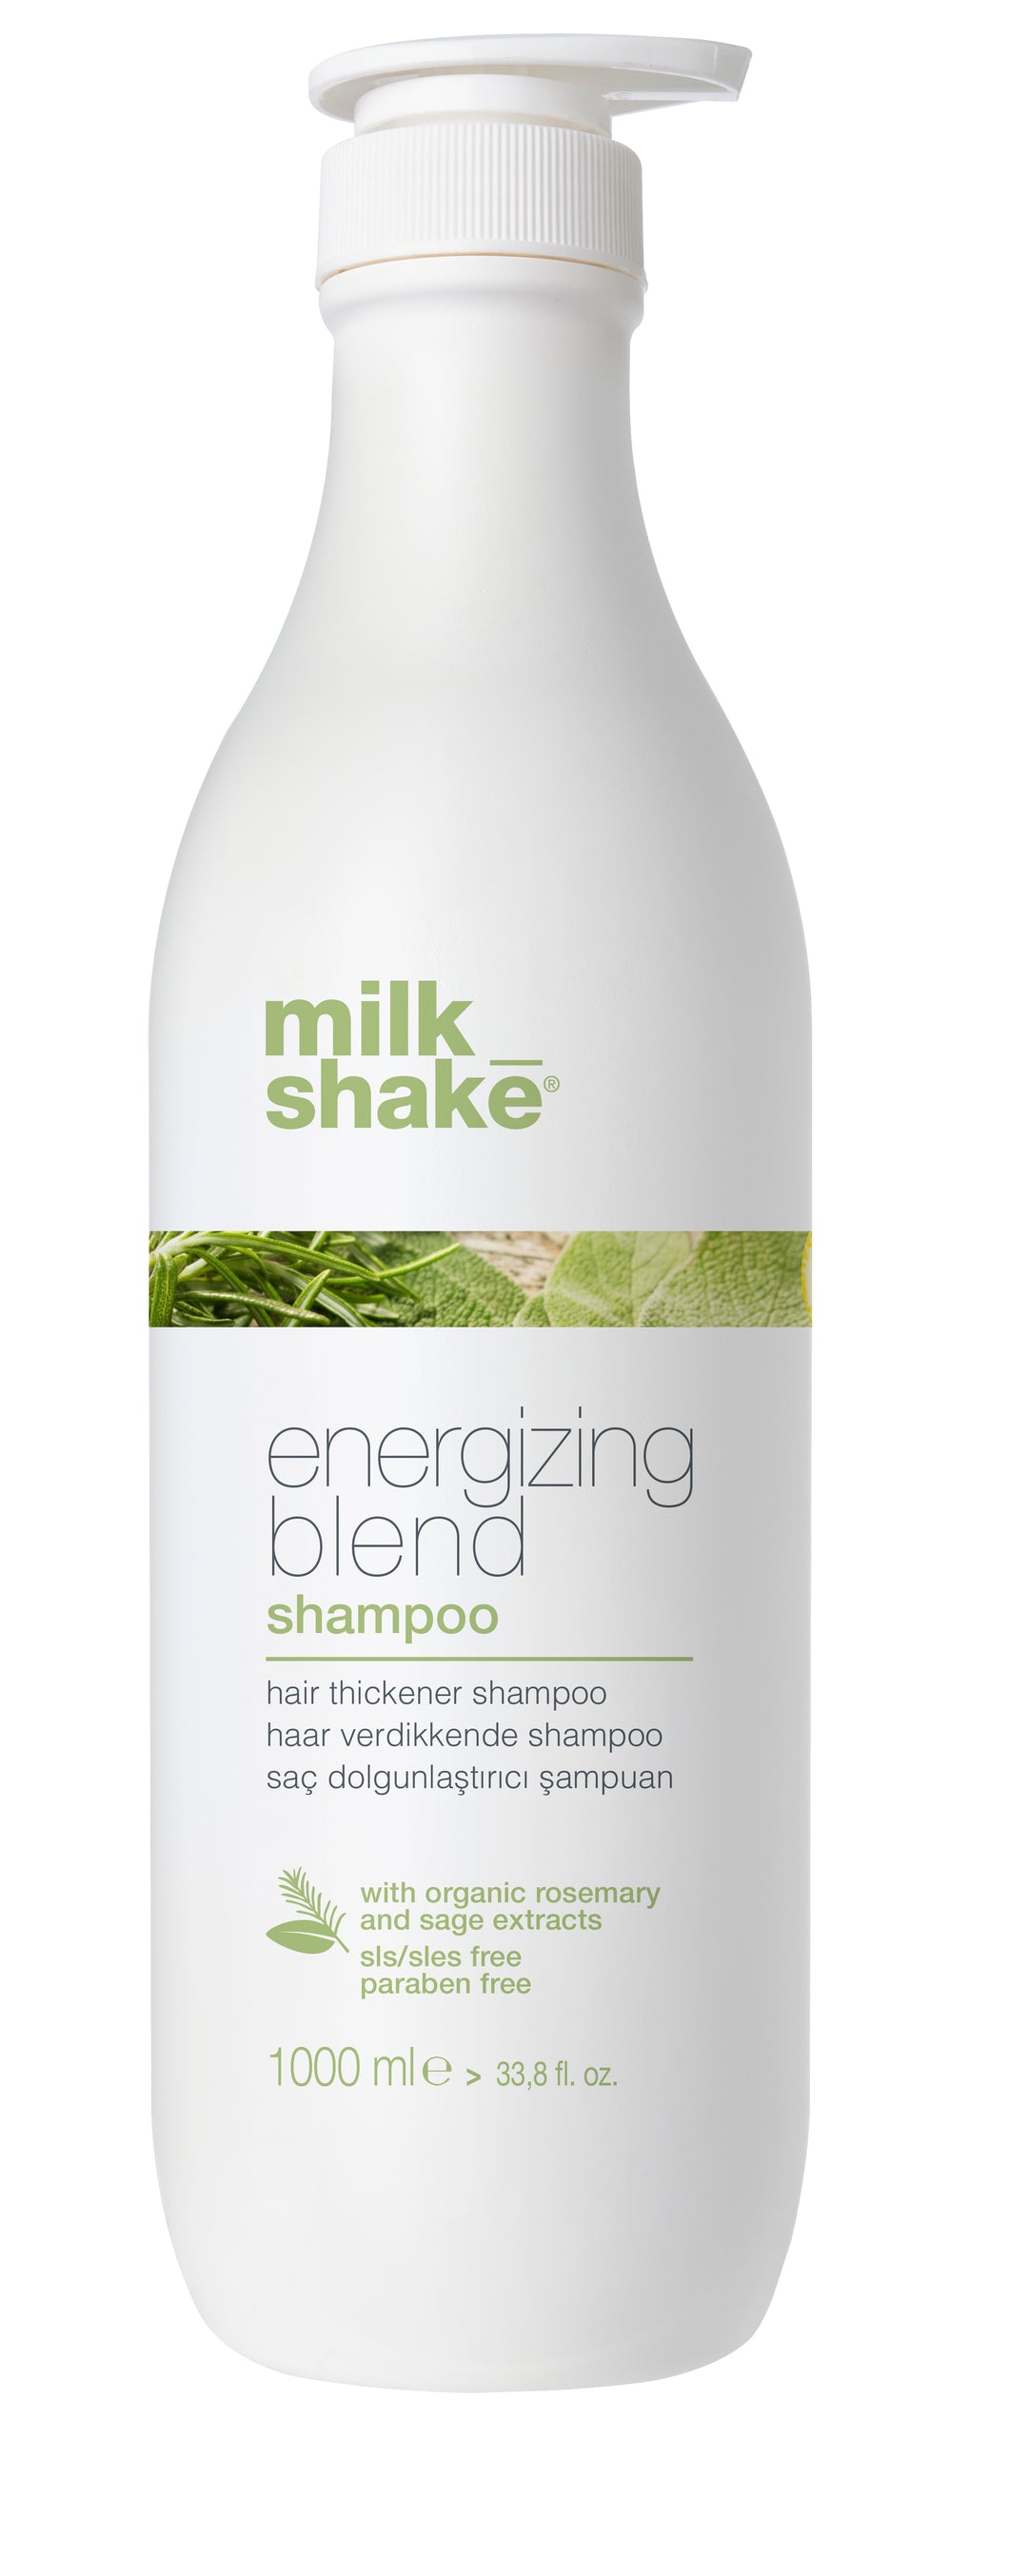 milk_shake energizing blend shampoo 1L